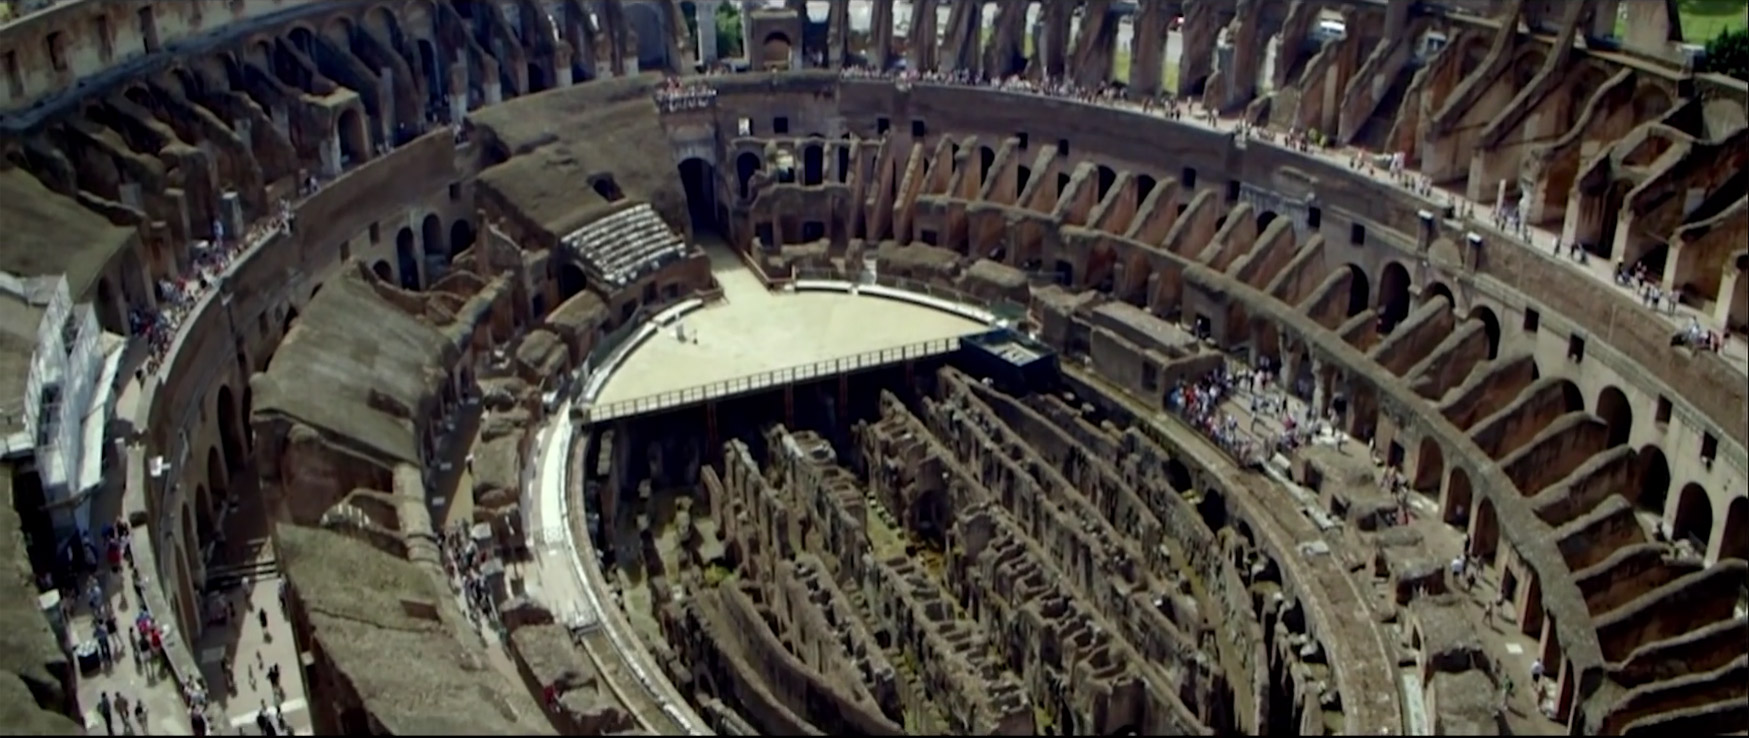 Restoration of the Colosseum